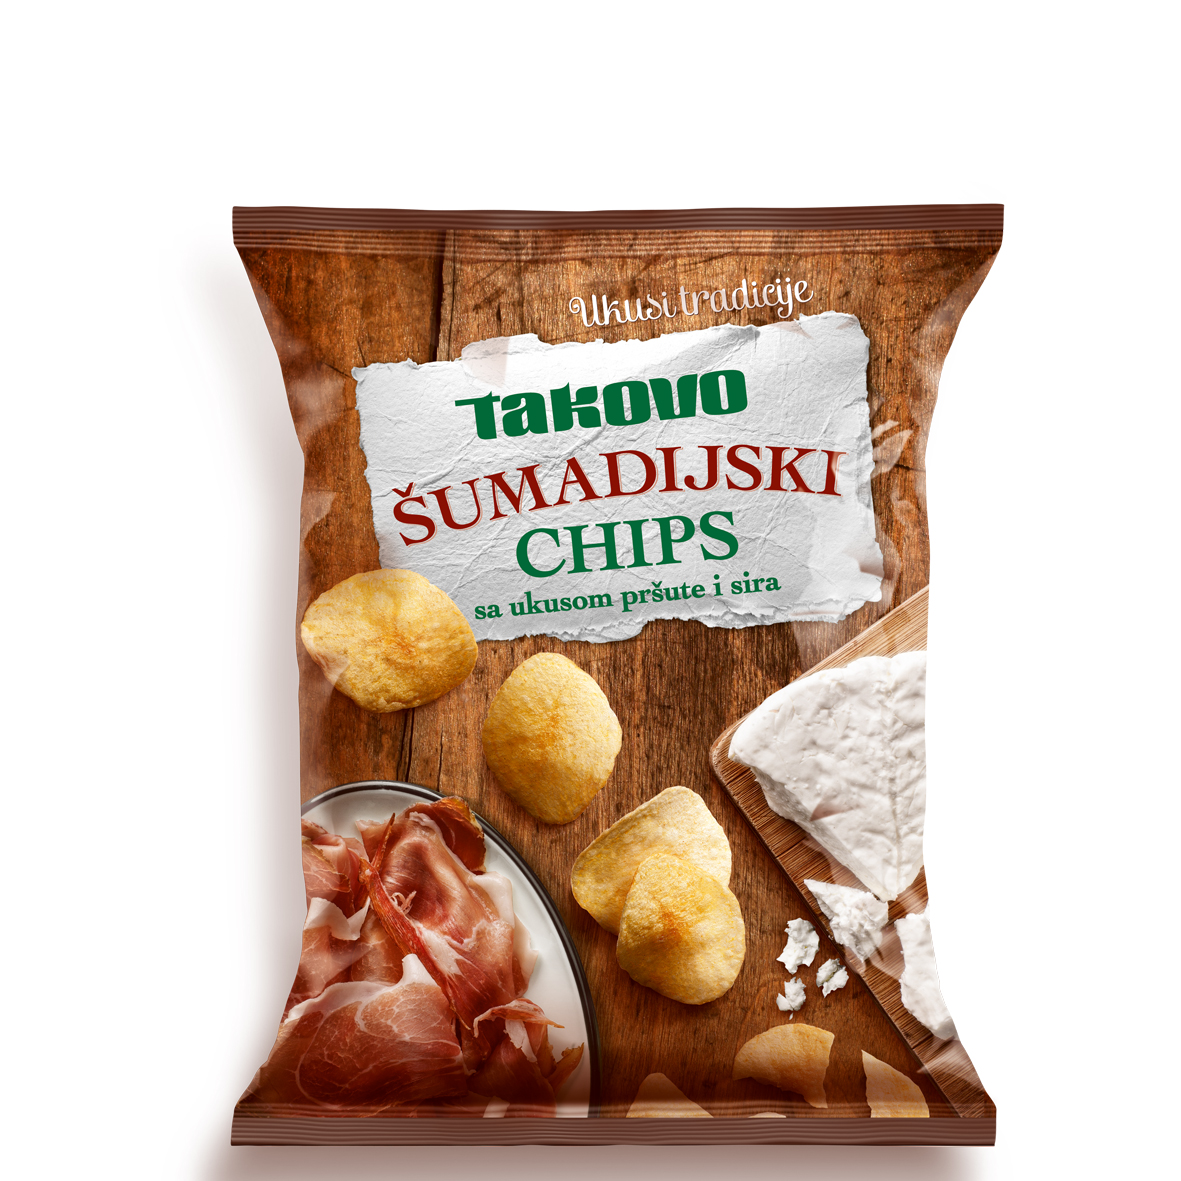 Chips Sumadijski 80g